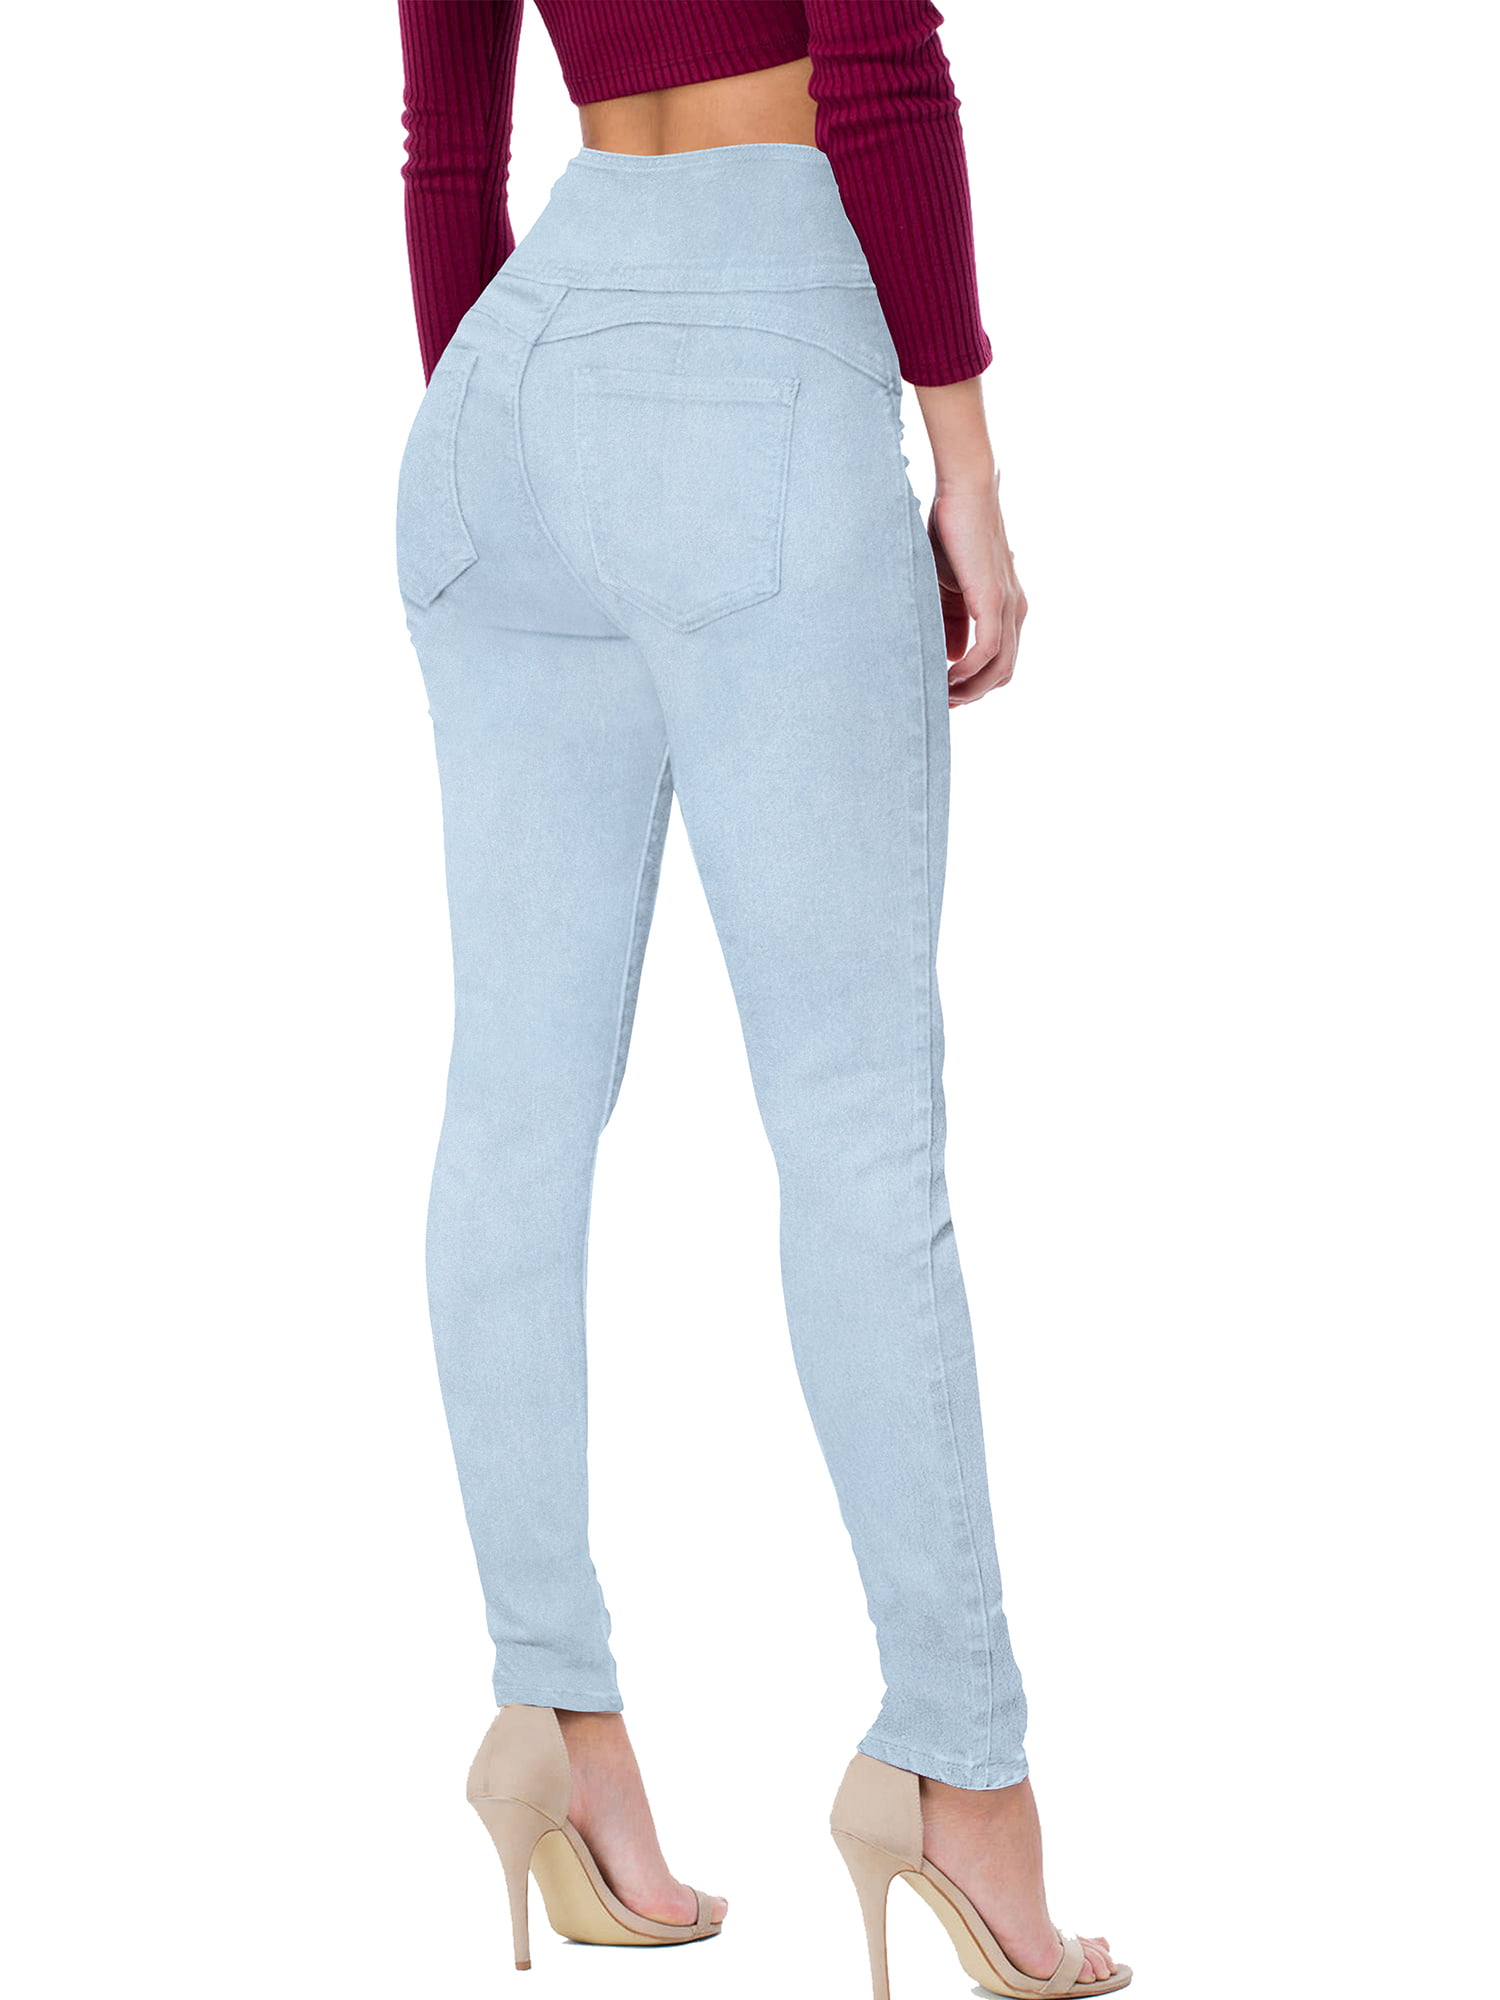 Hybrid & Company Women's Butt Lift V2 Super Comfy Stretch Denim Jeans 